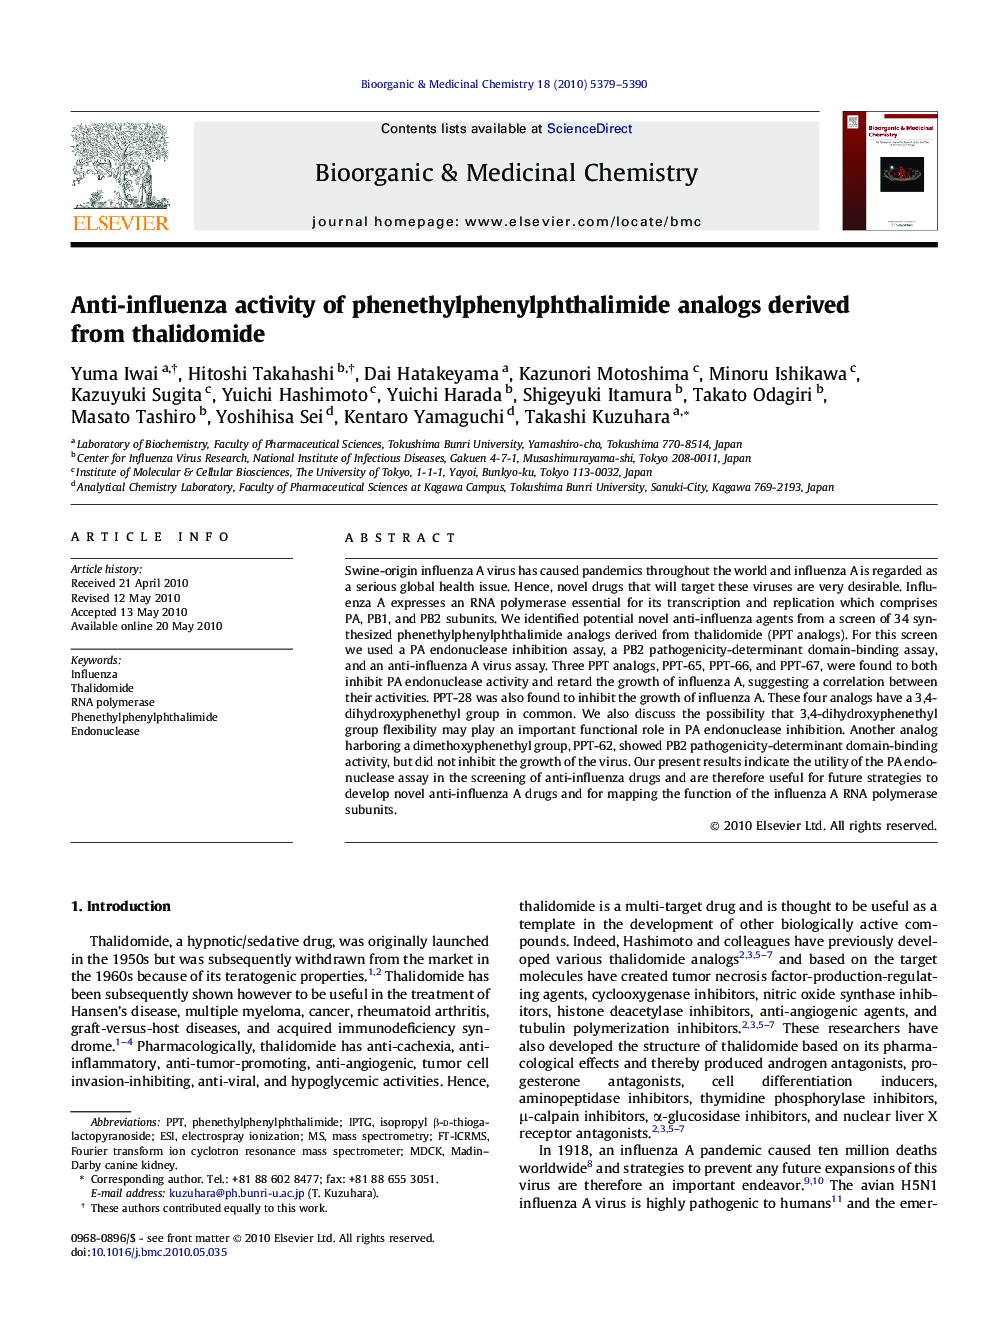 Anti-influenza activity of phenethylphenylphthalimide analogs derived from thalidomide